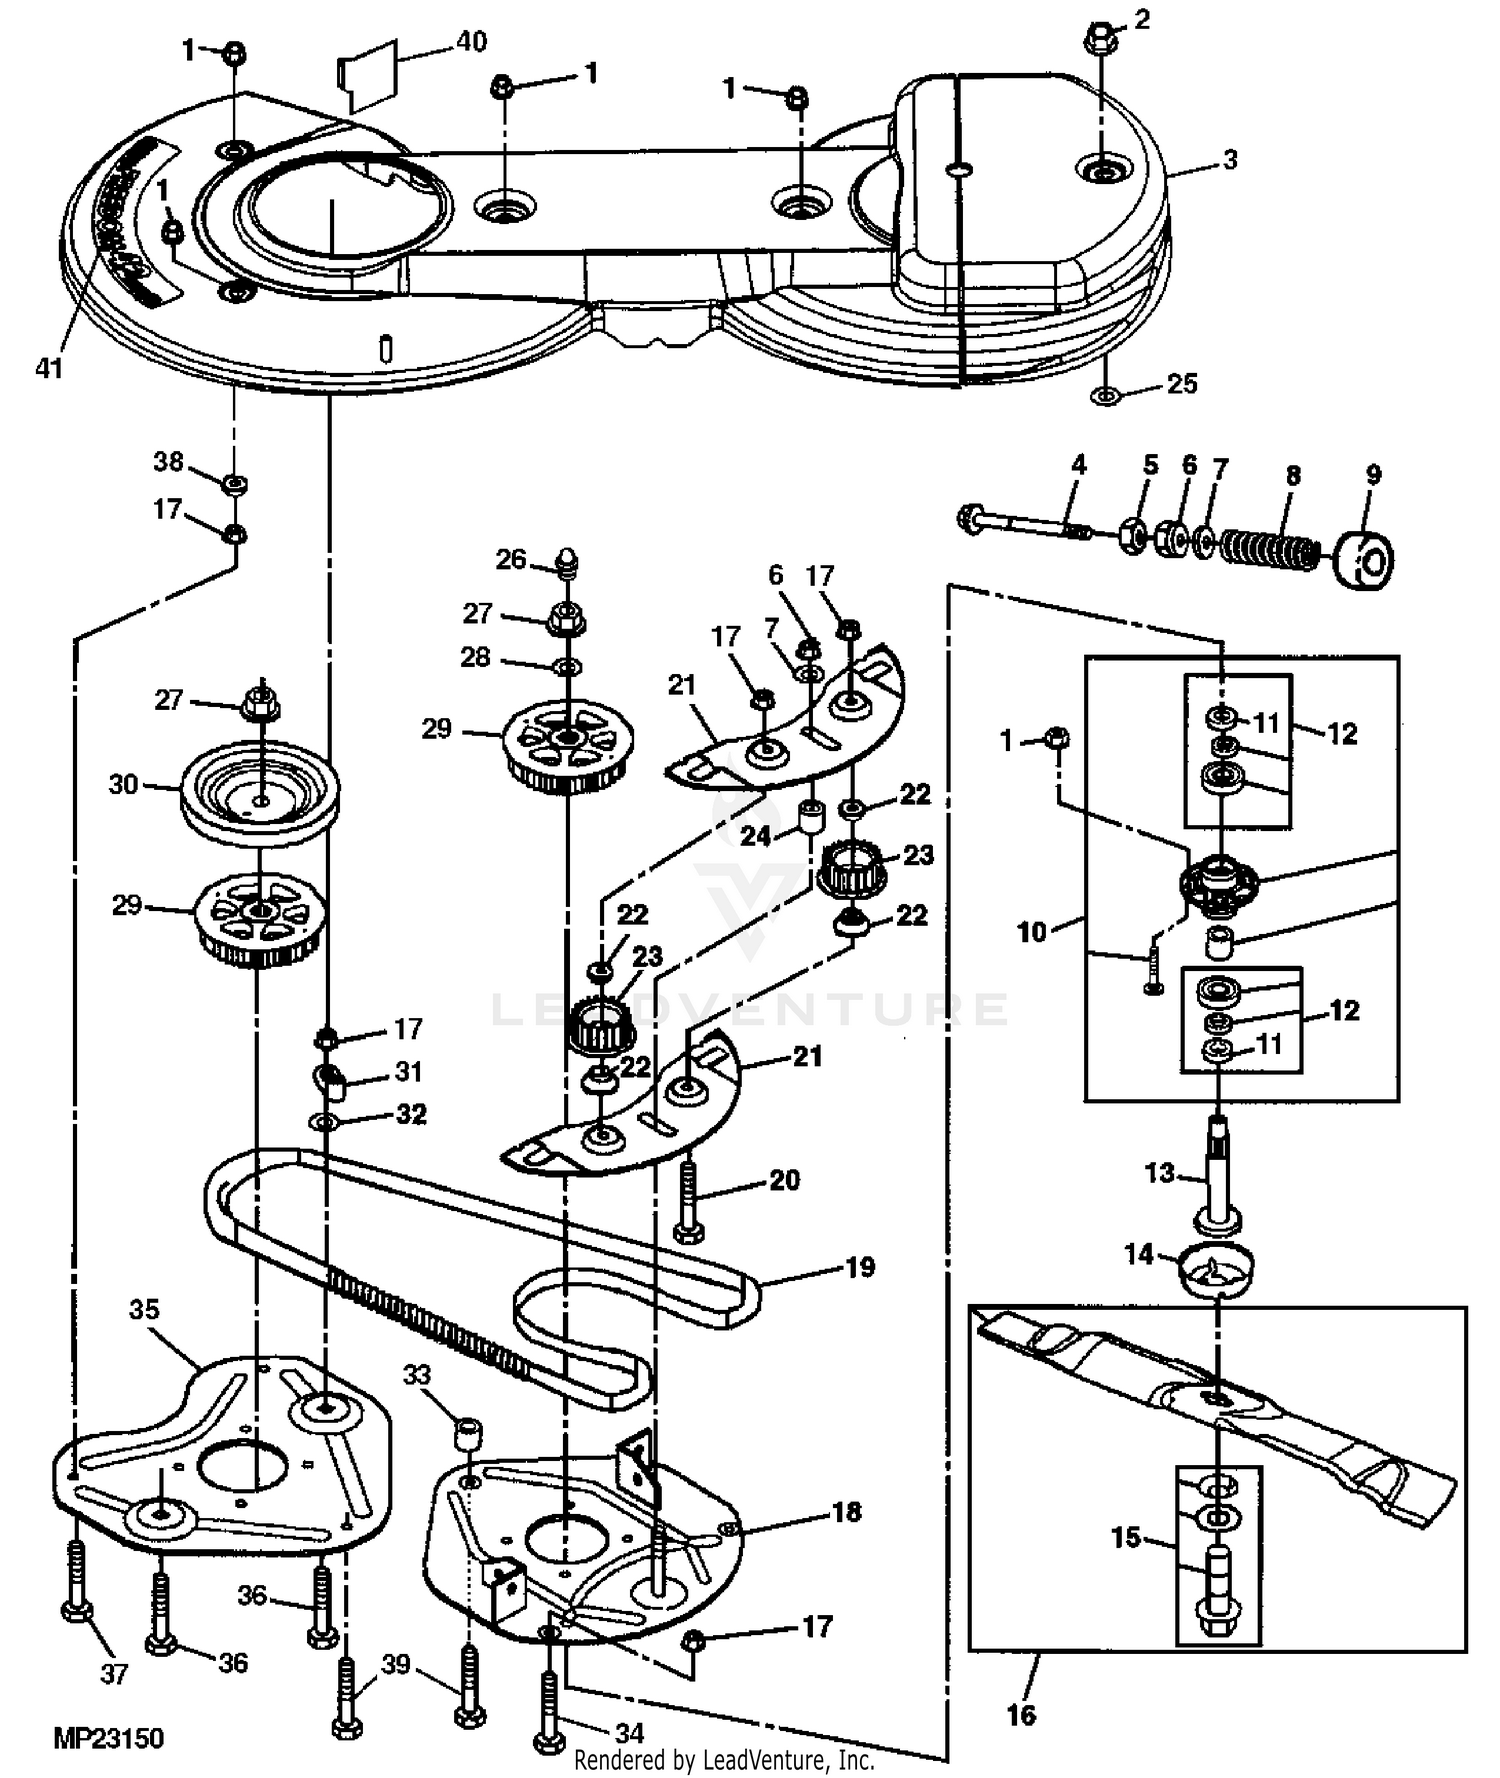 Wiring Diagram Info: 34 John Deere Chainsaw Parts Diagram